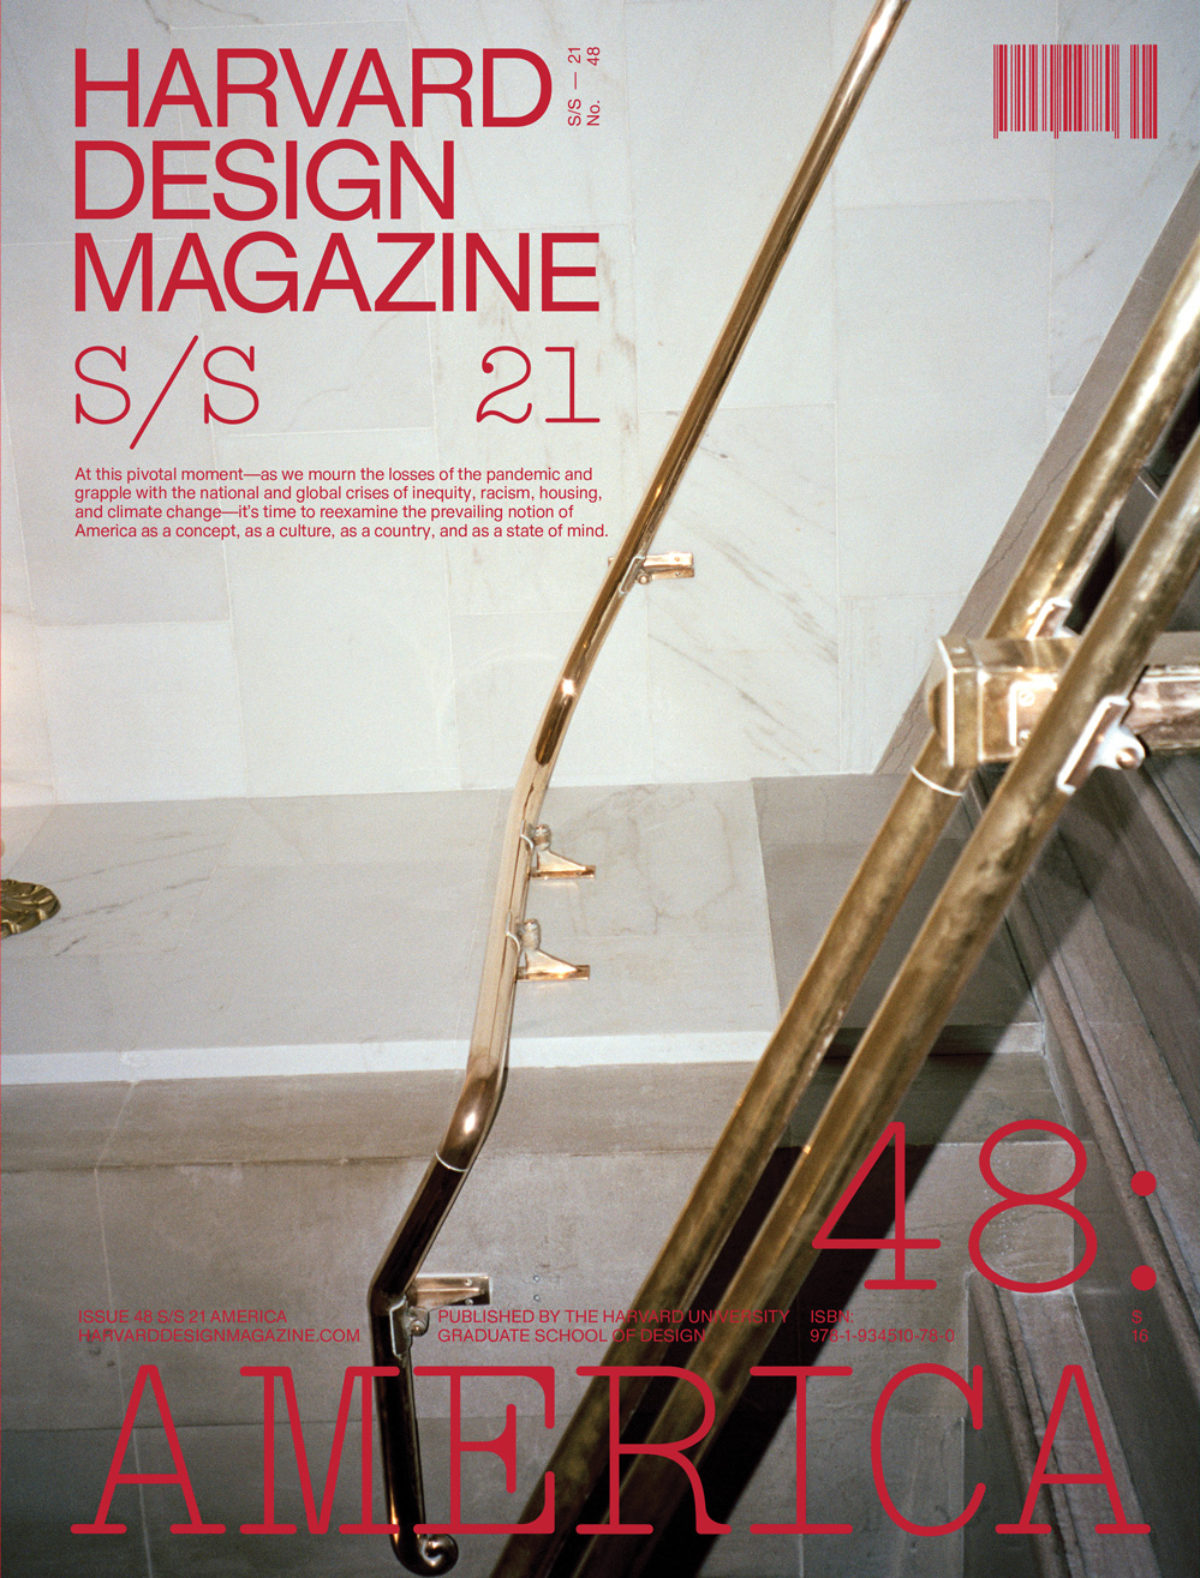 Harvard Design Magazine, number 48, 